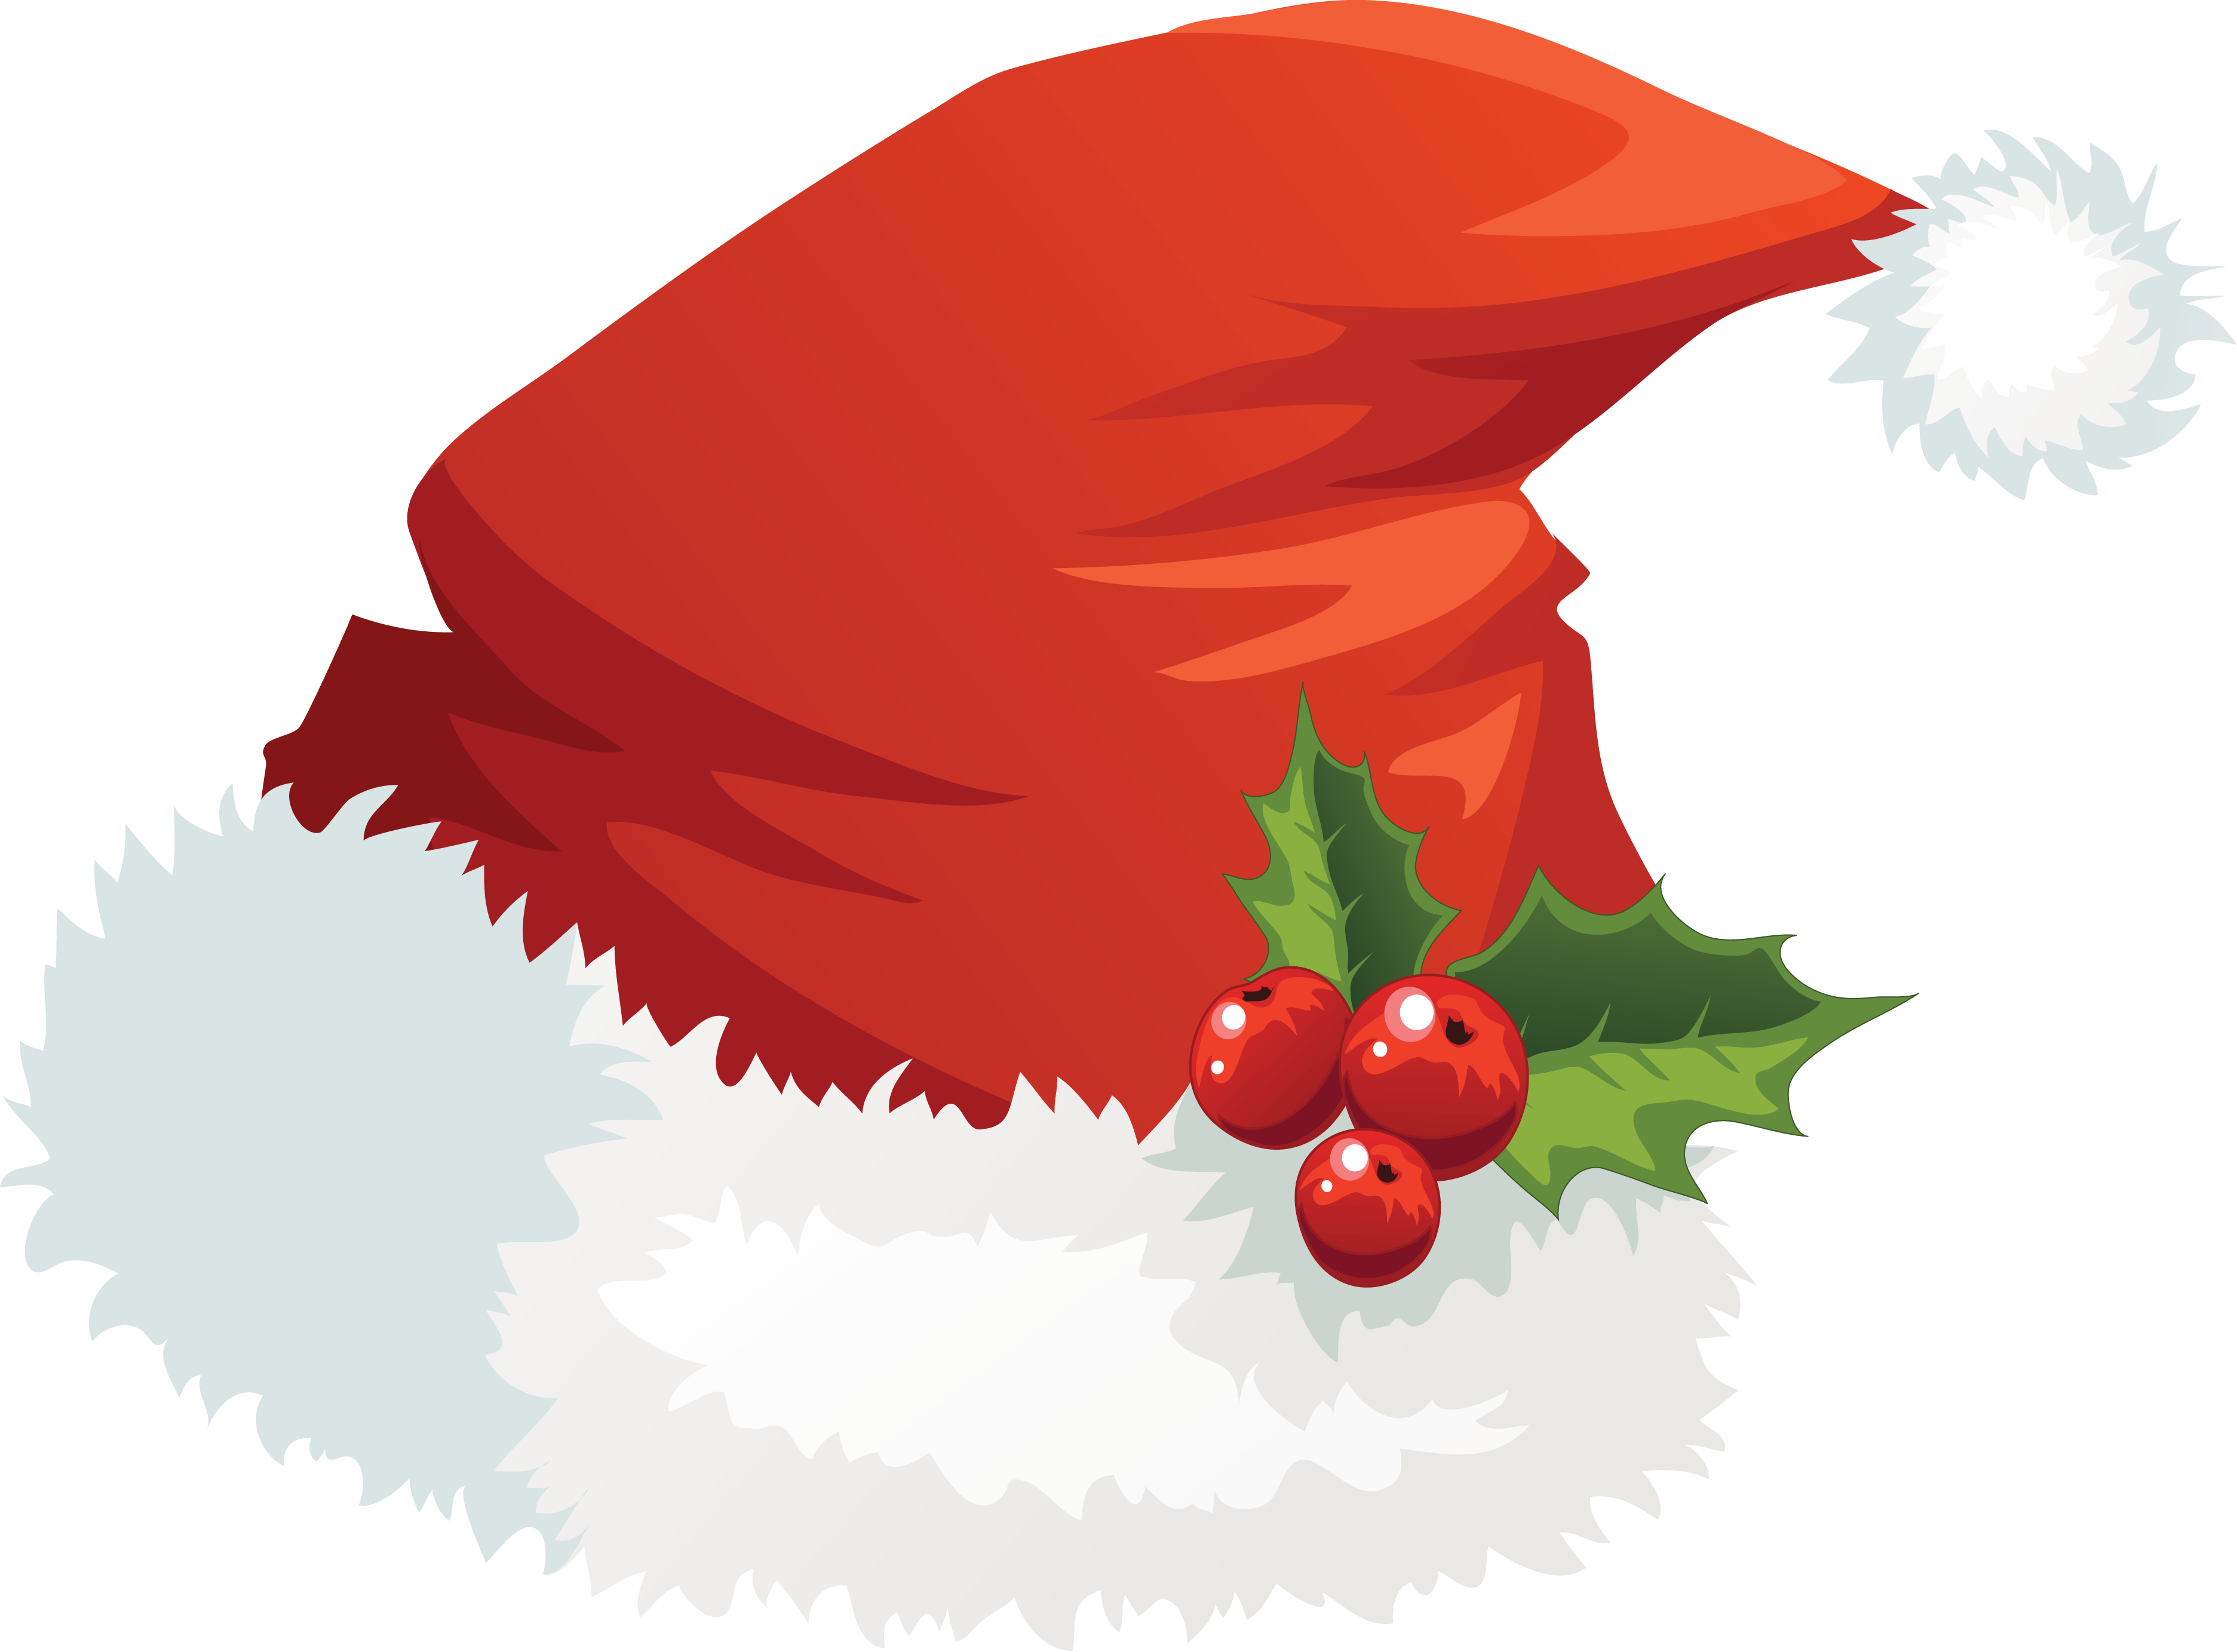 Santa Claus hat PNG image free Download 